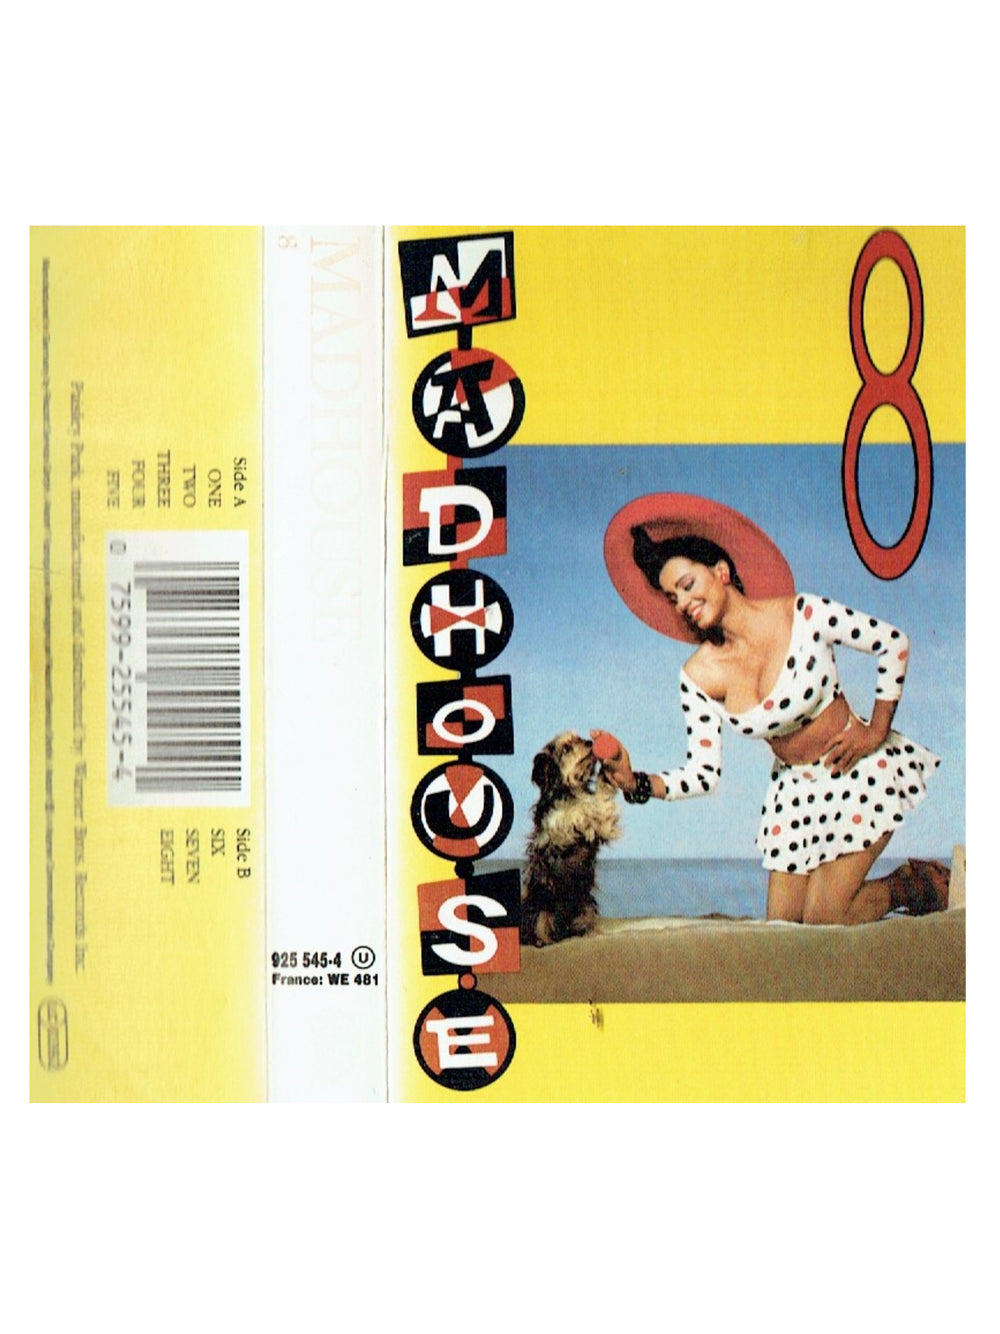 Prince – Madhouse 8 Tape Original Tape Cassette 8 Tracks EU / UK Release 1987 Prince